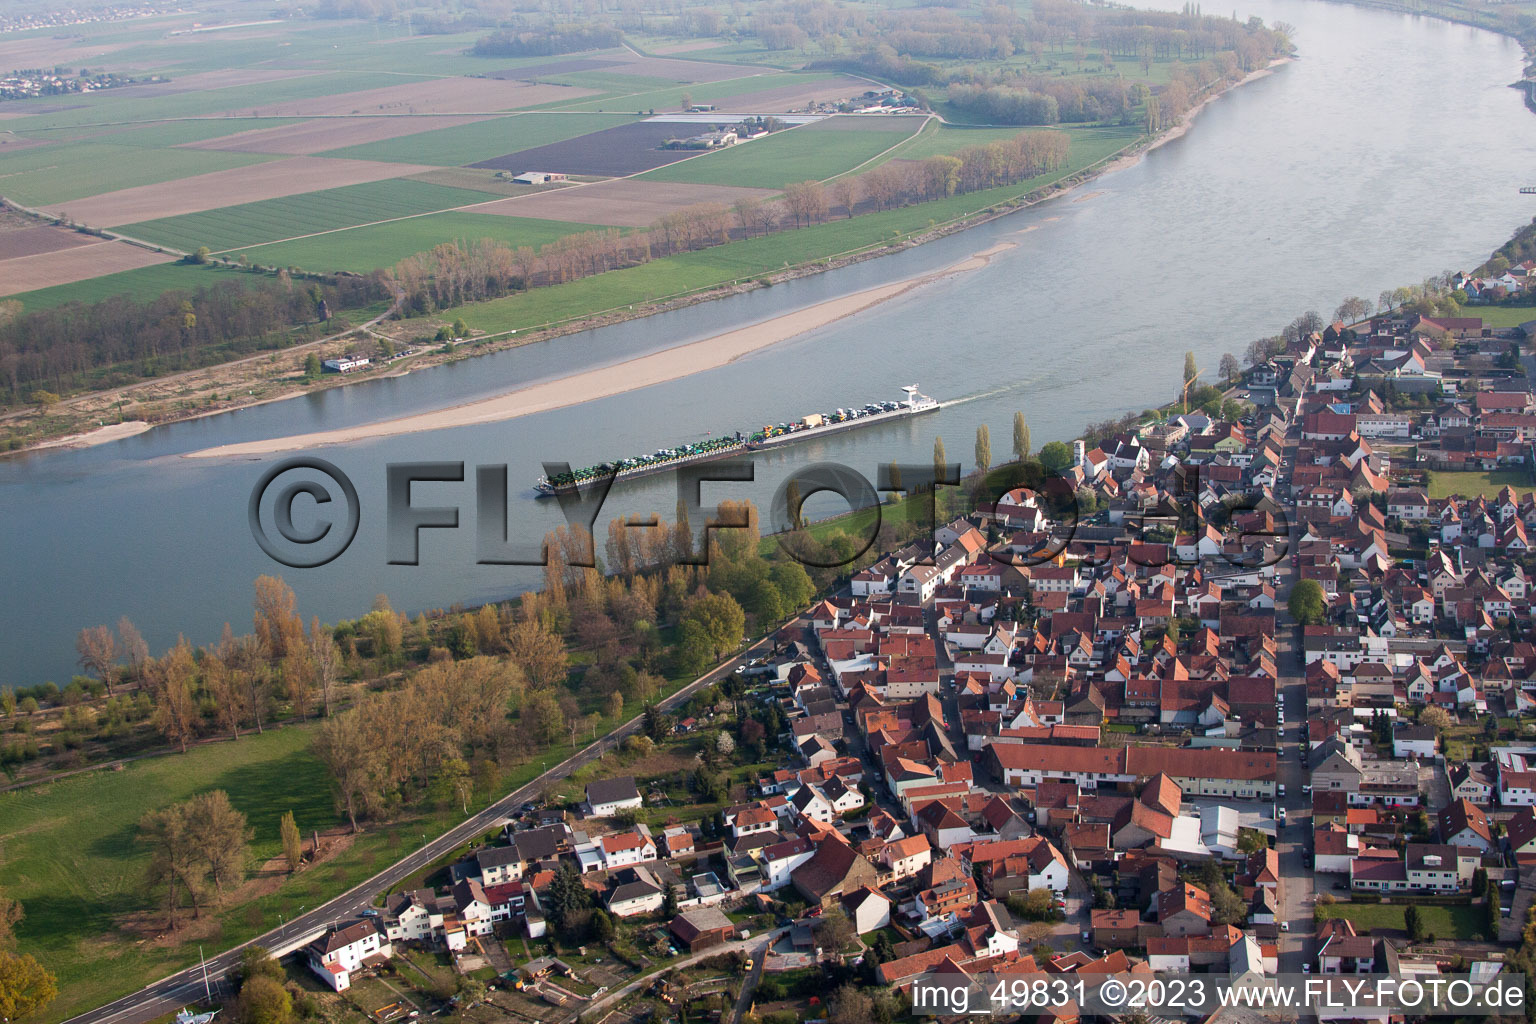 District Rheindürkheim in Worms in the state Rhineland-Palatinate, Germany viewn from the air